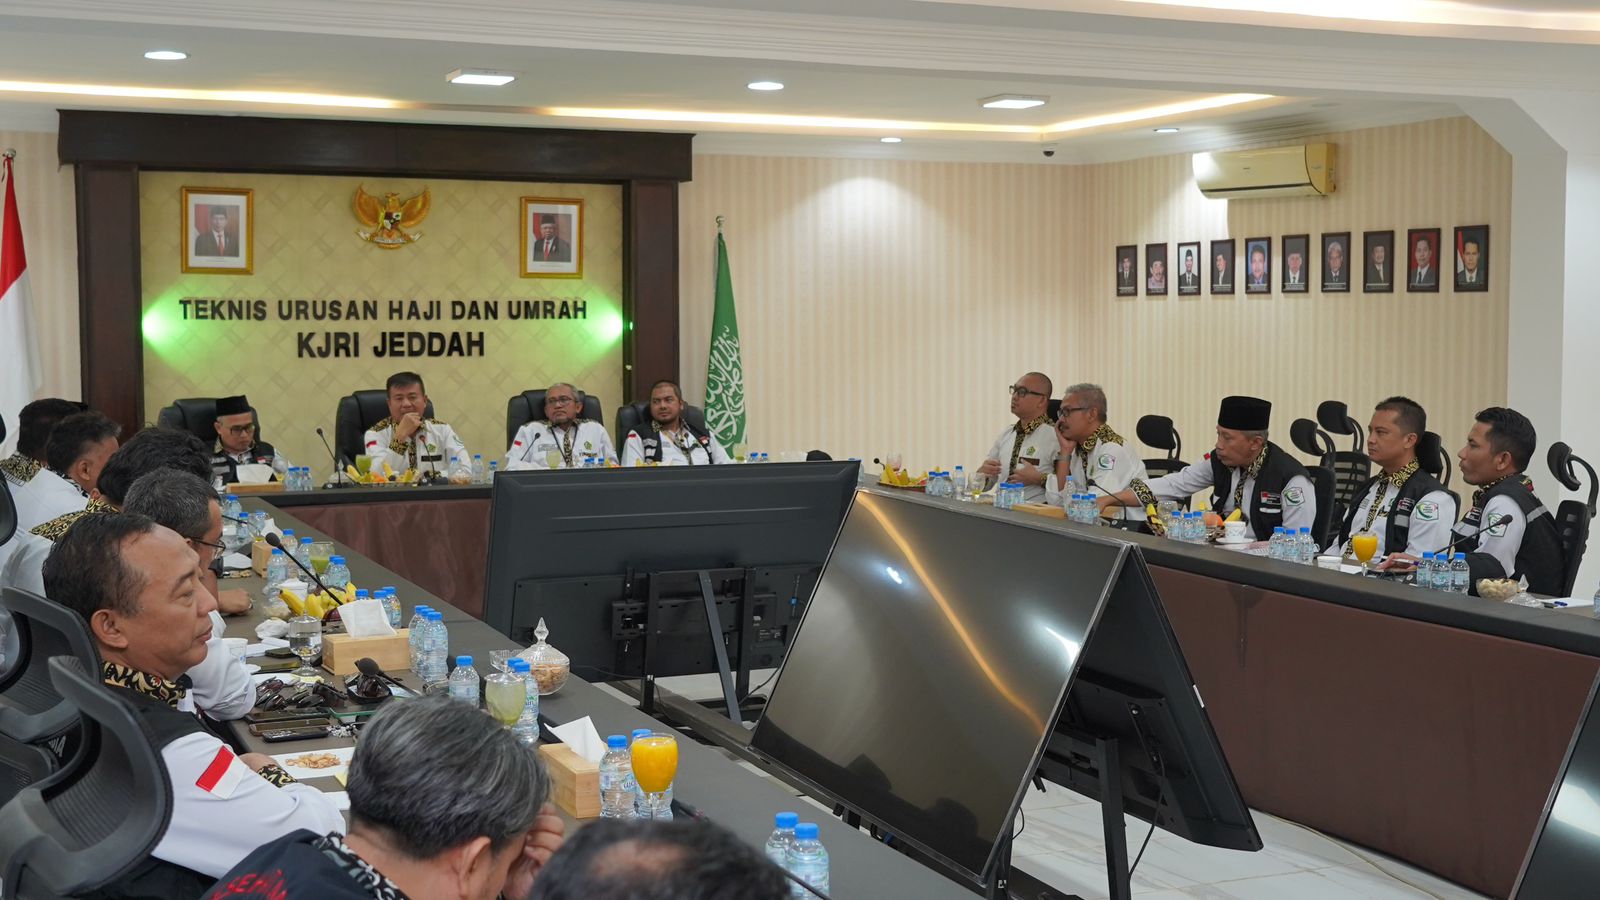 45 Jemaah Haji Indonesia Masih Dirawat di RS Arab Saudi, 25 di Antaranya di Makkah